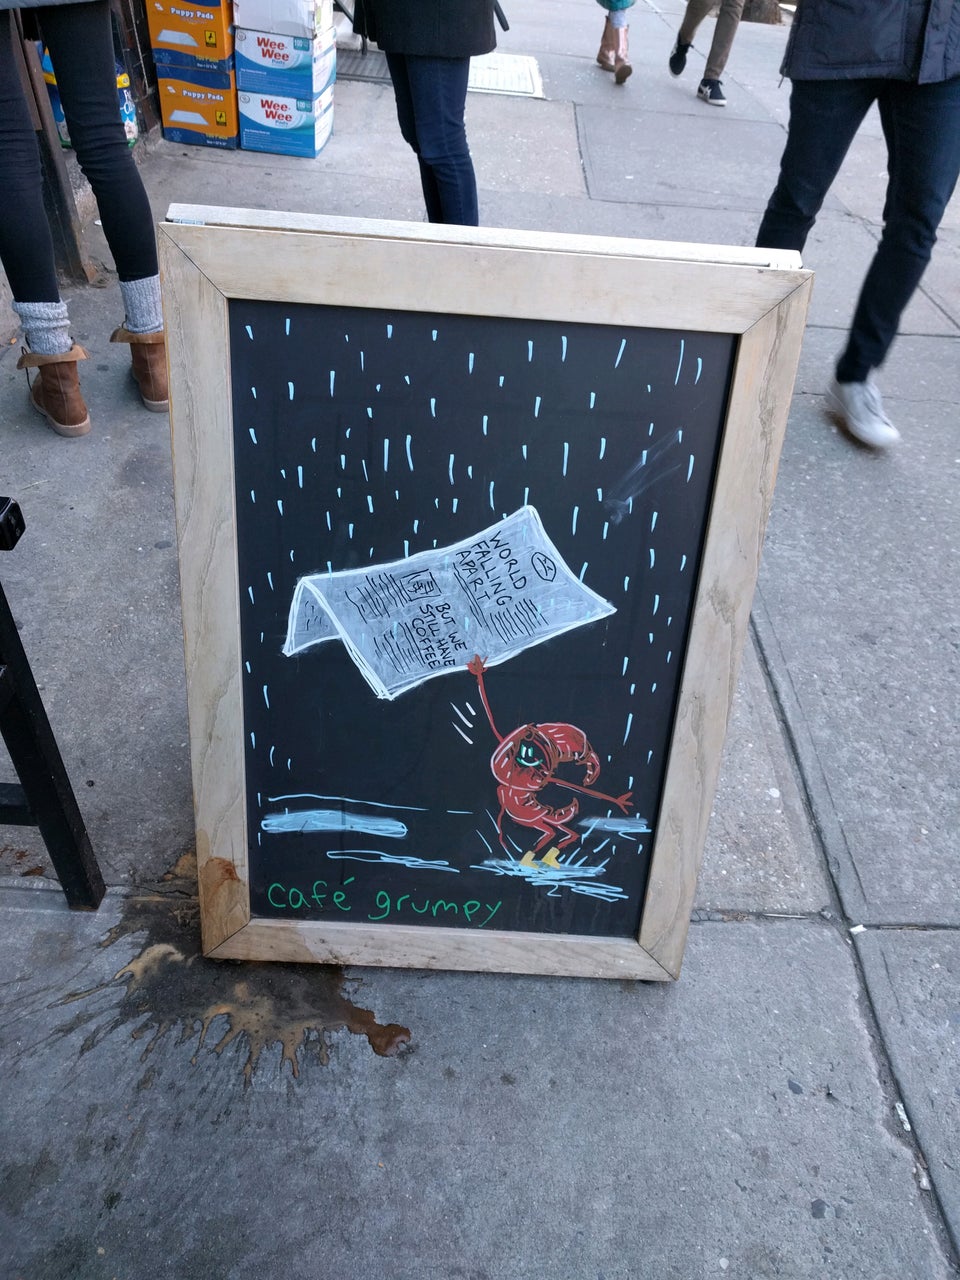 Photo of Cafe Grumpy - Park Slope